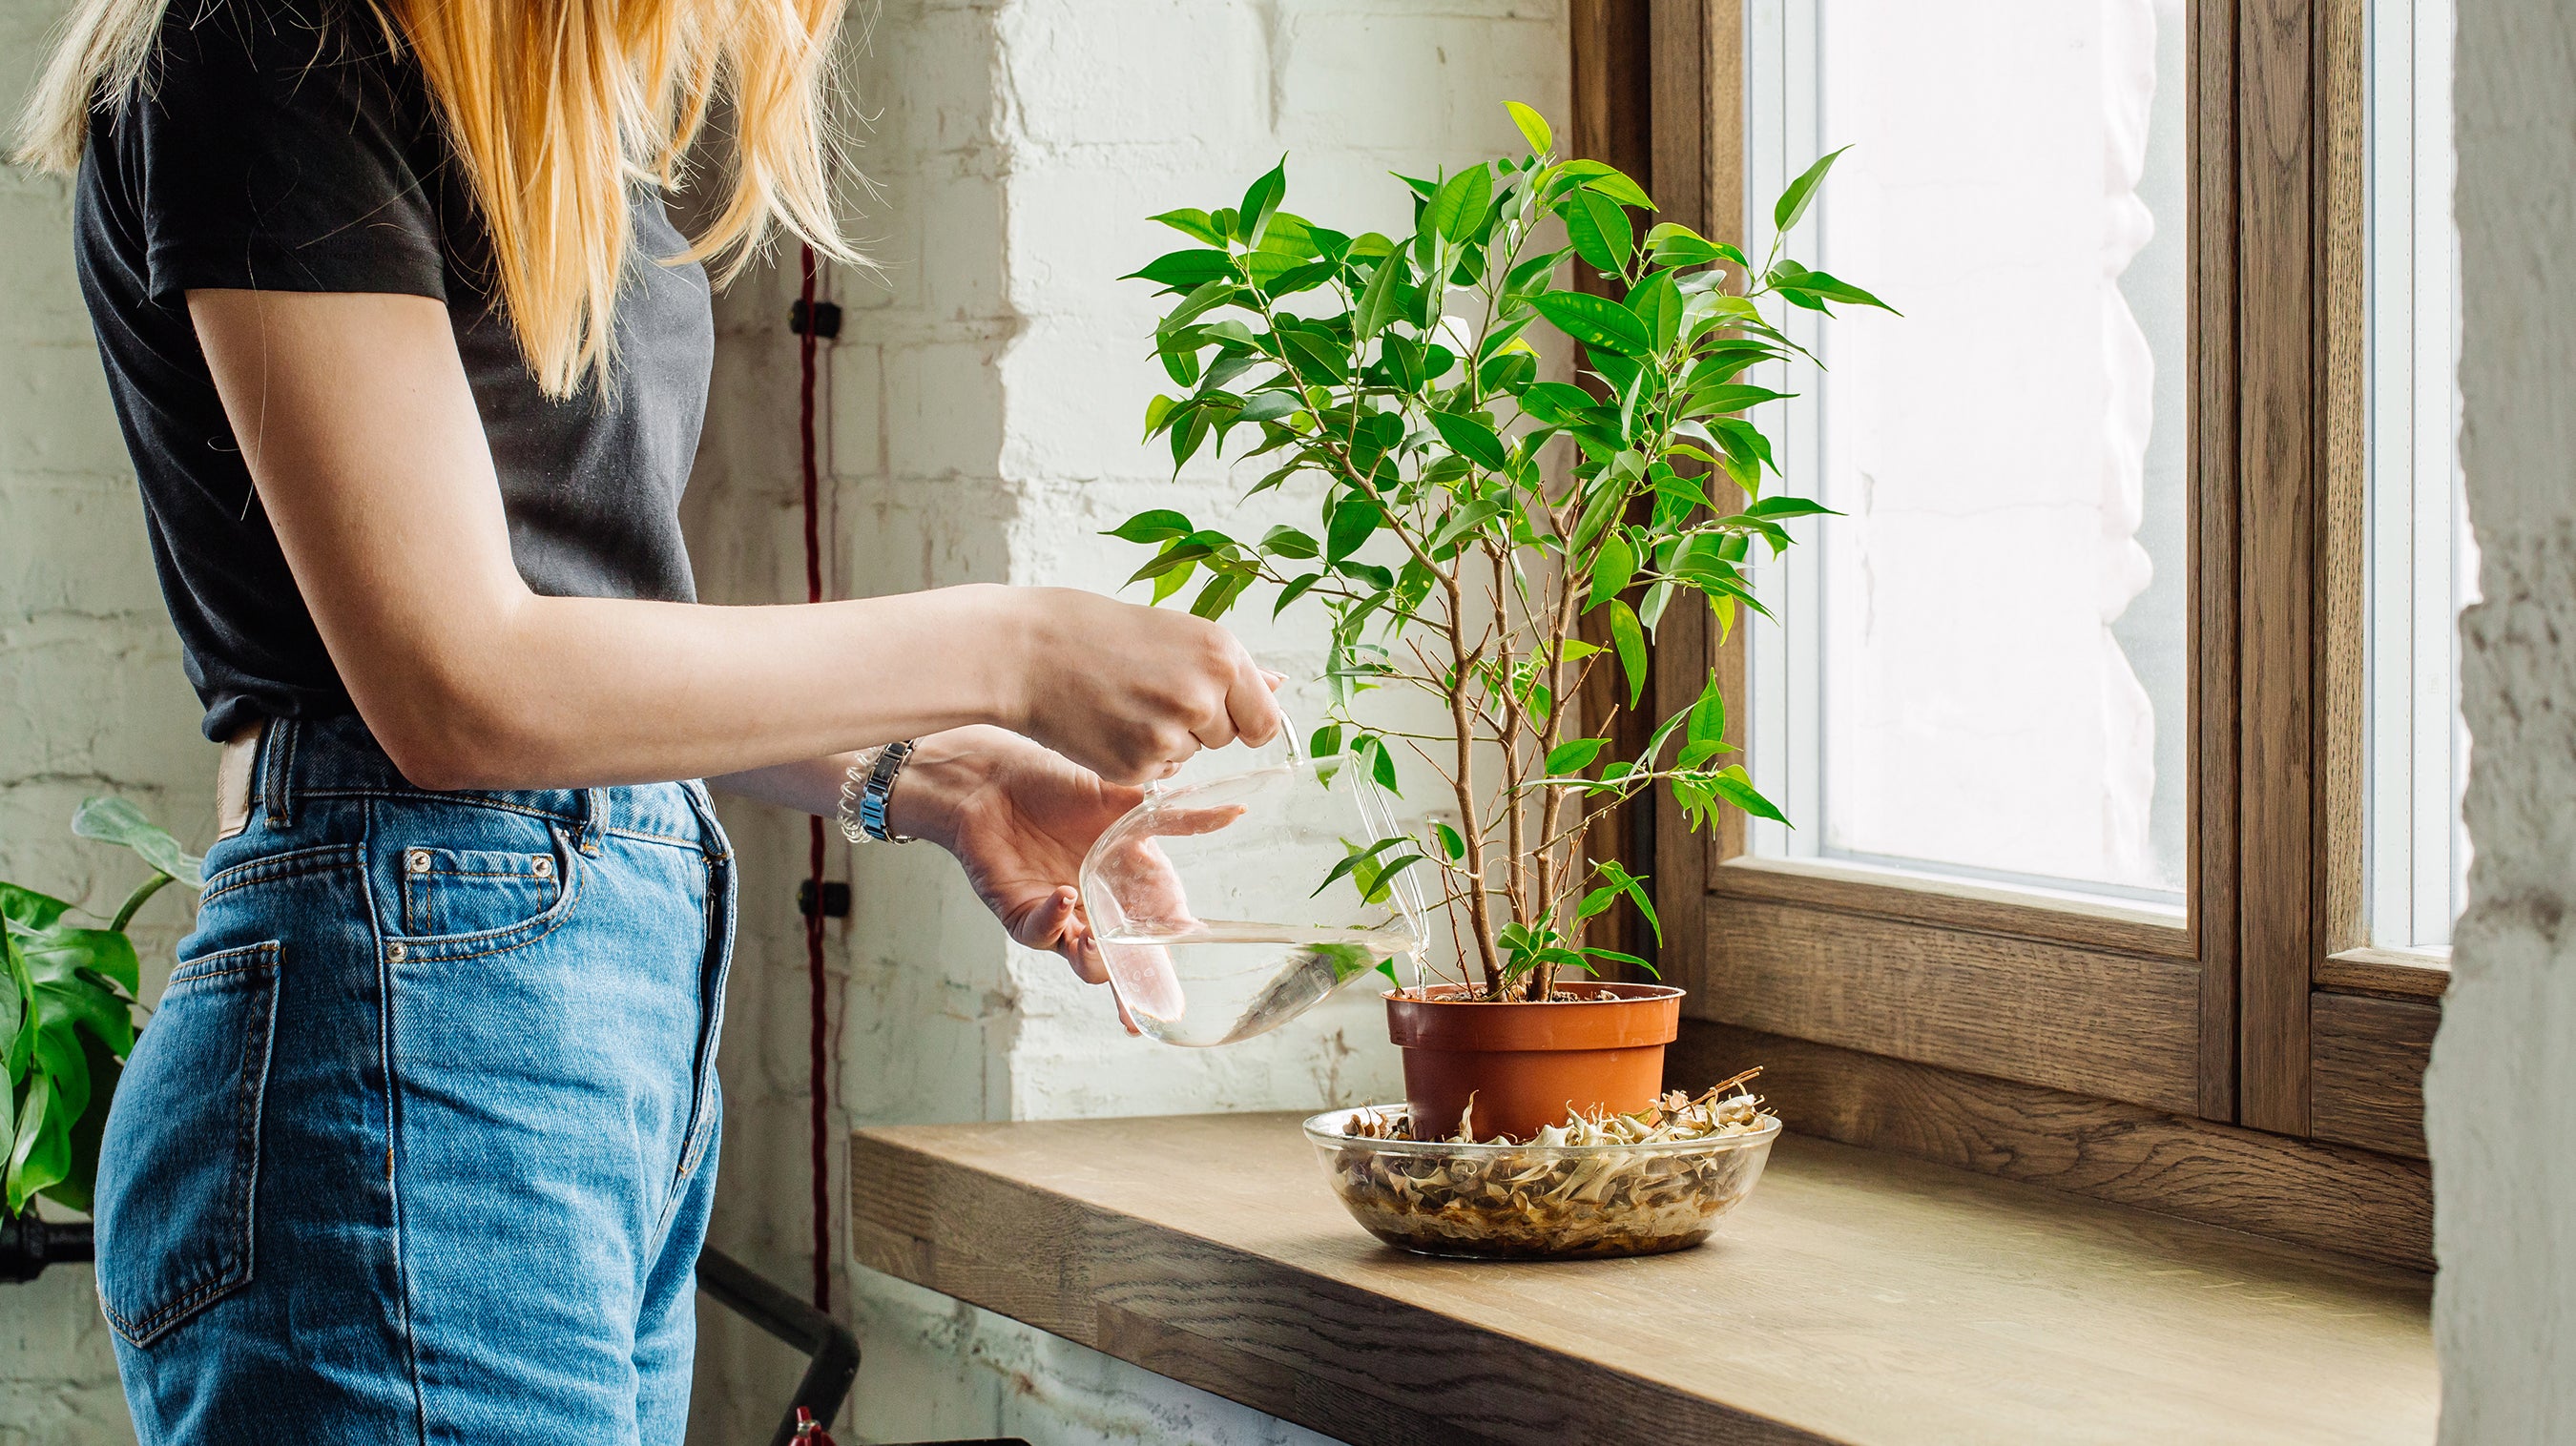 How often should I water my plants? 😕